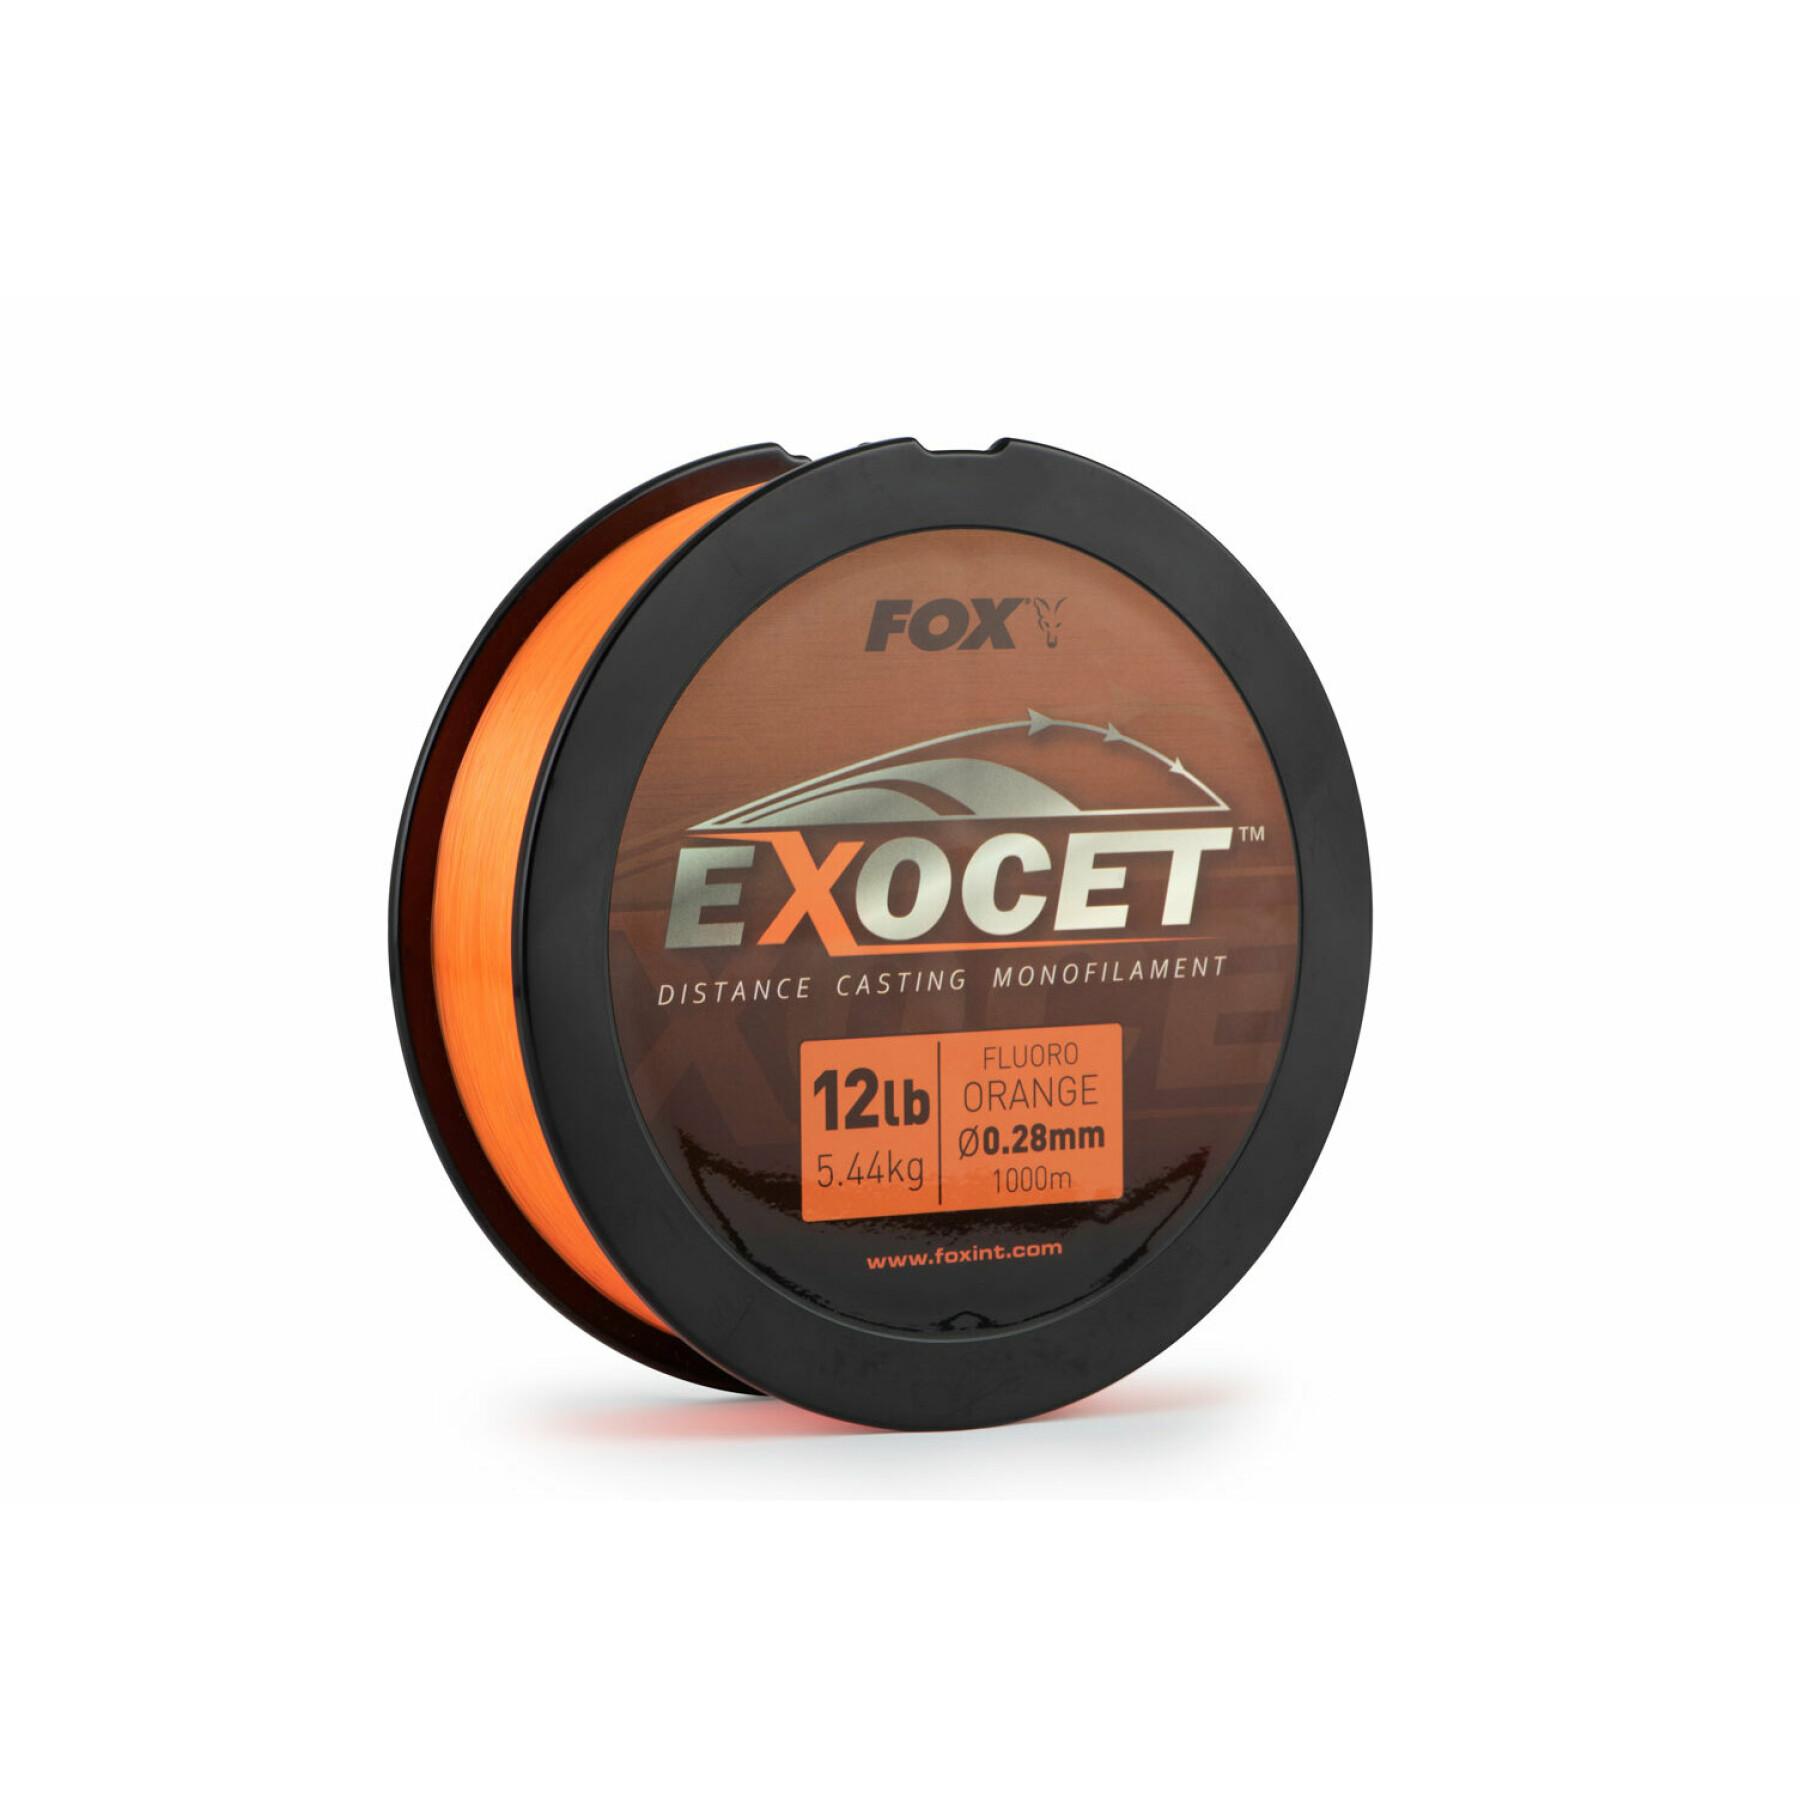 Linea Exocet Fox mono